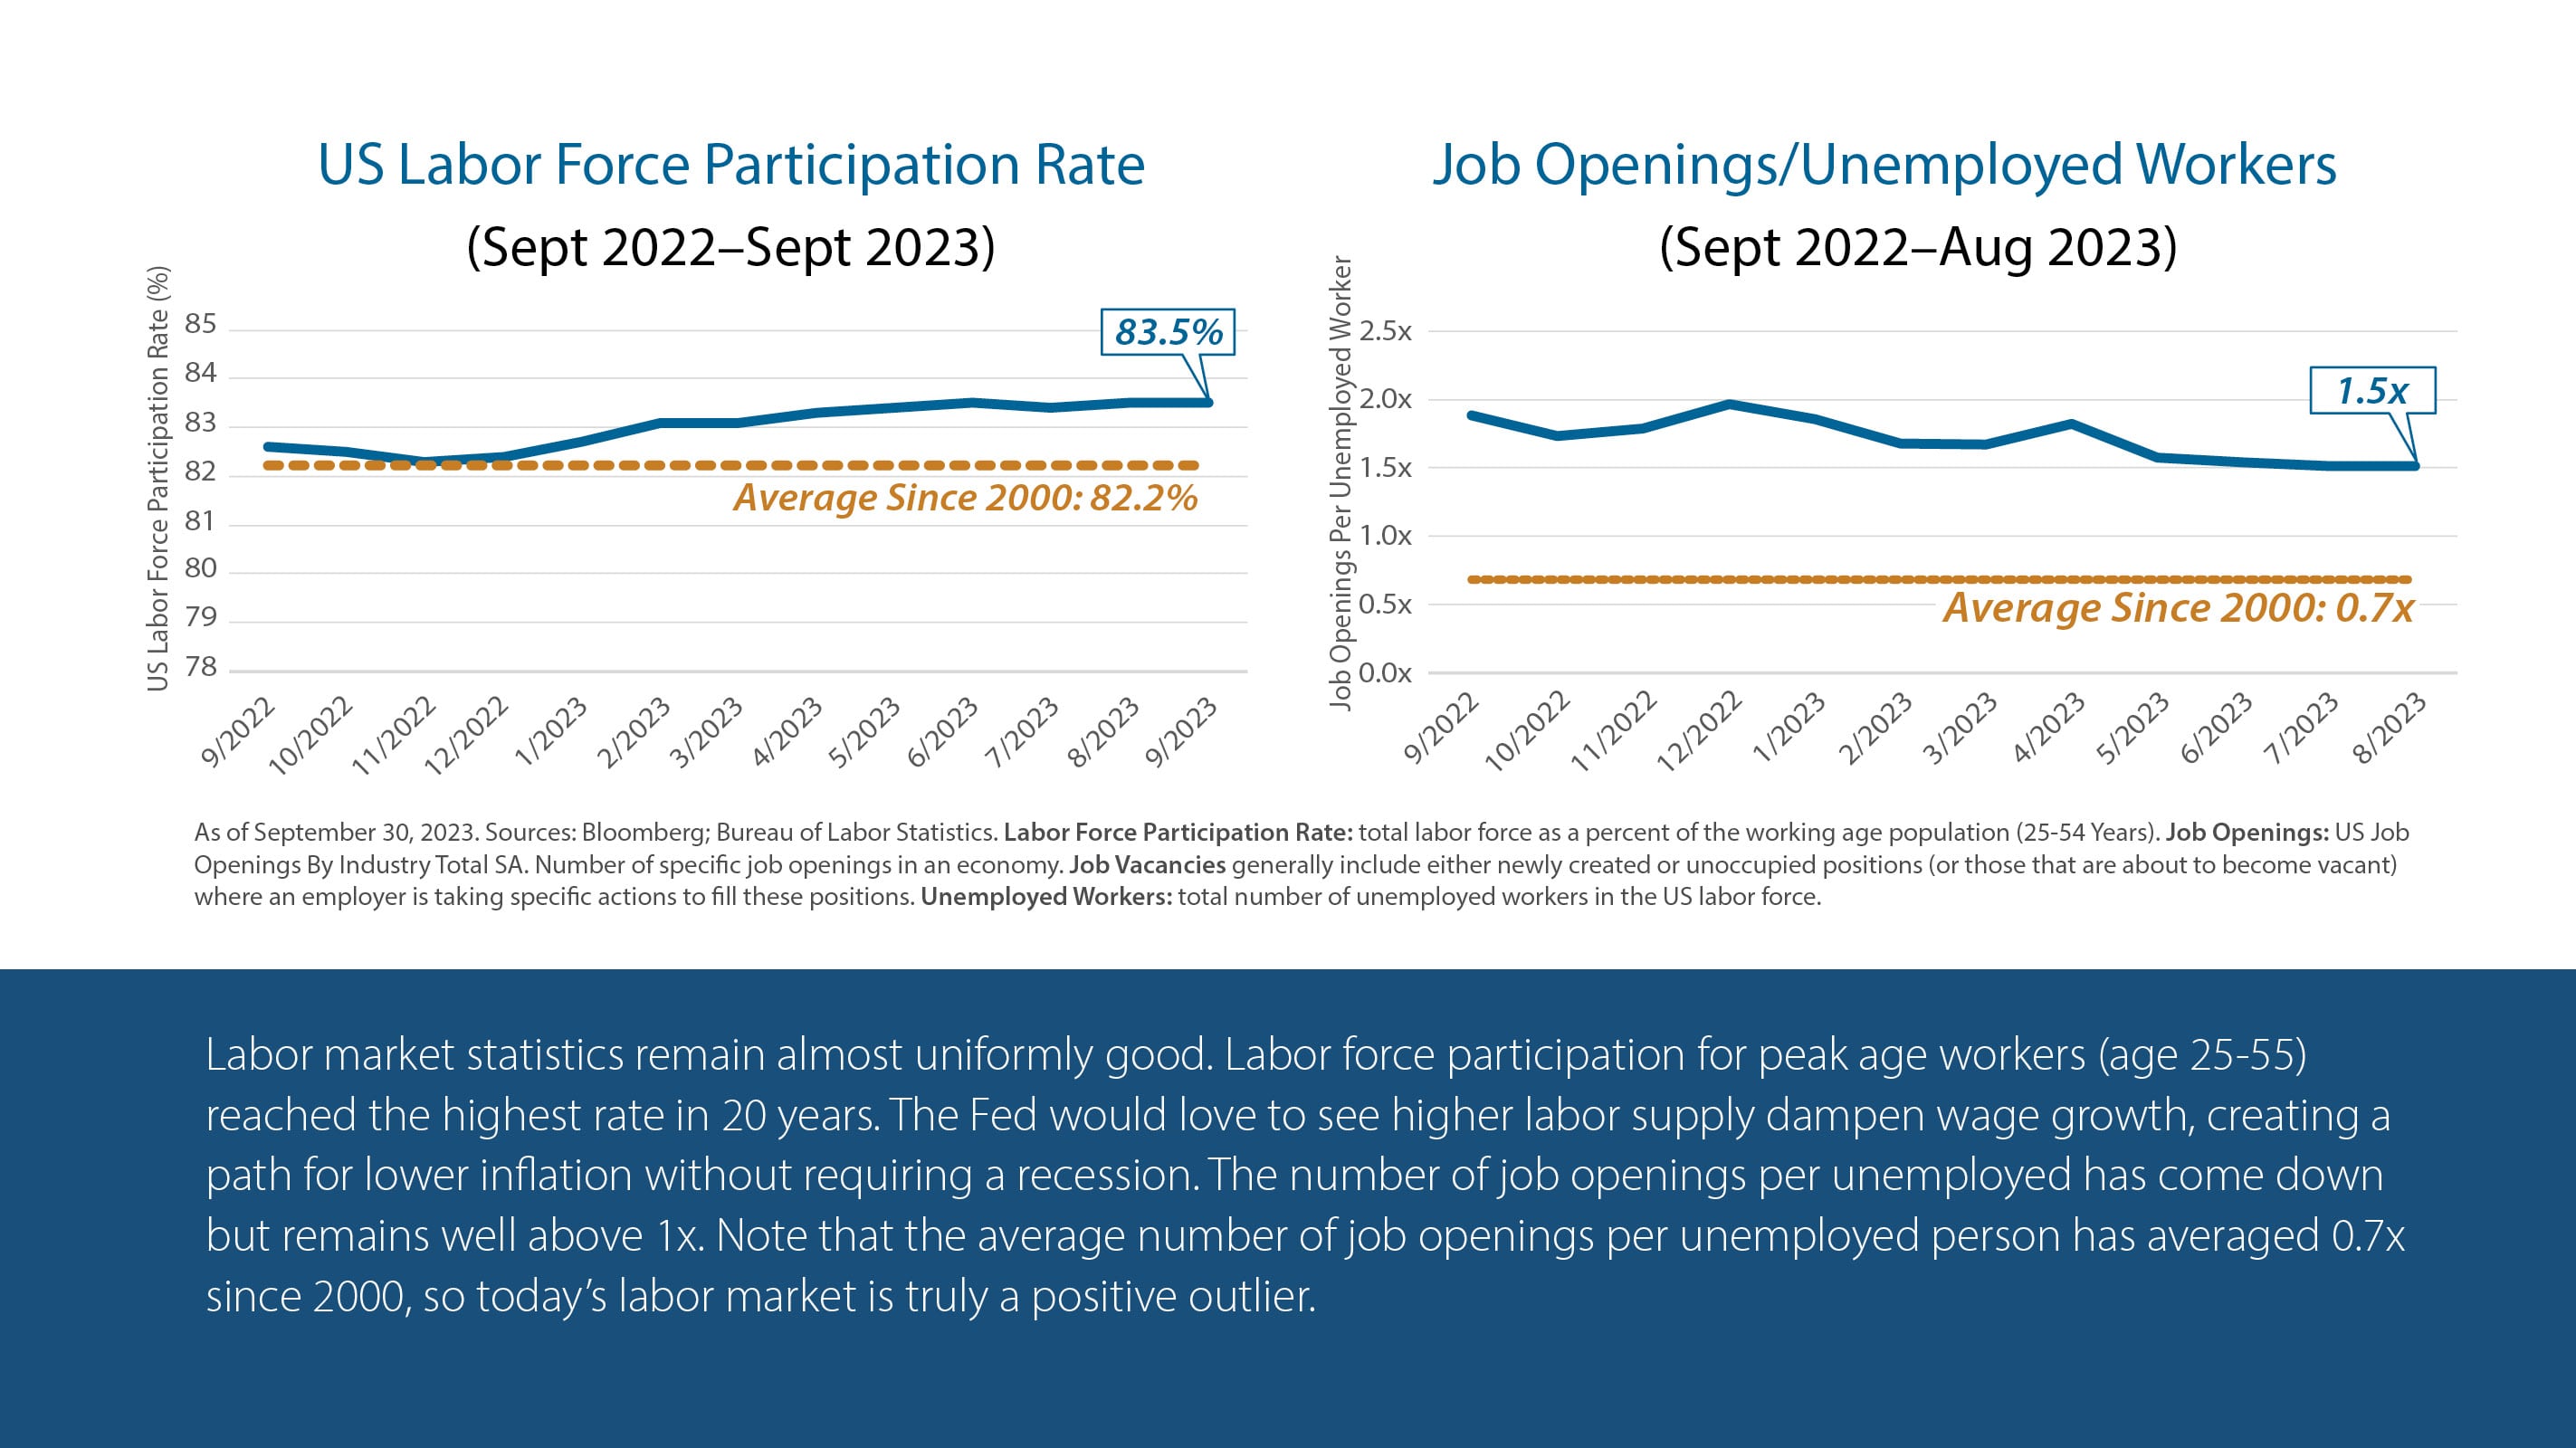 Labor market statistics remain almost uniformly good